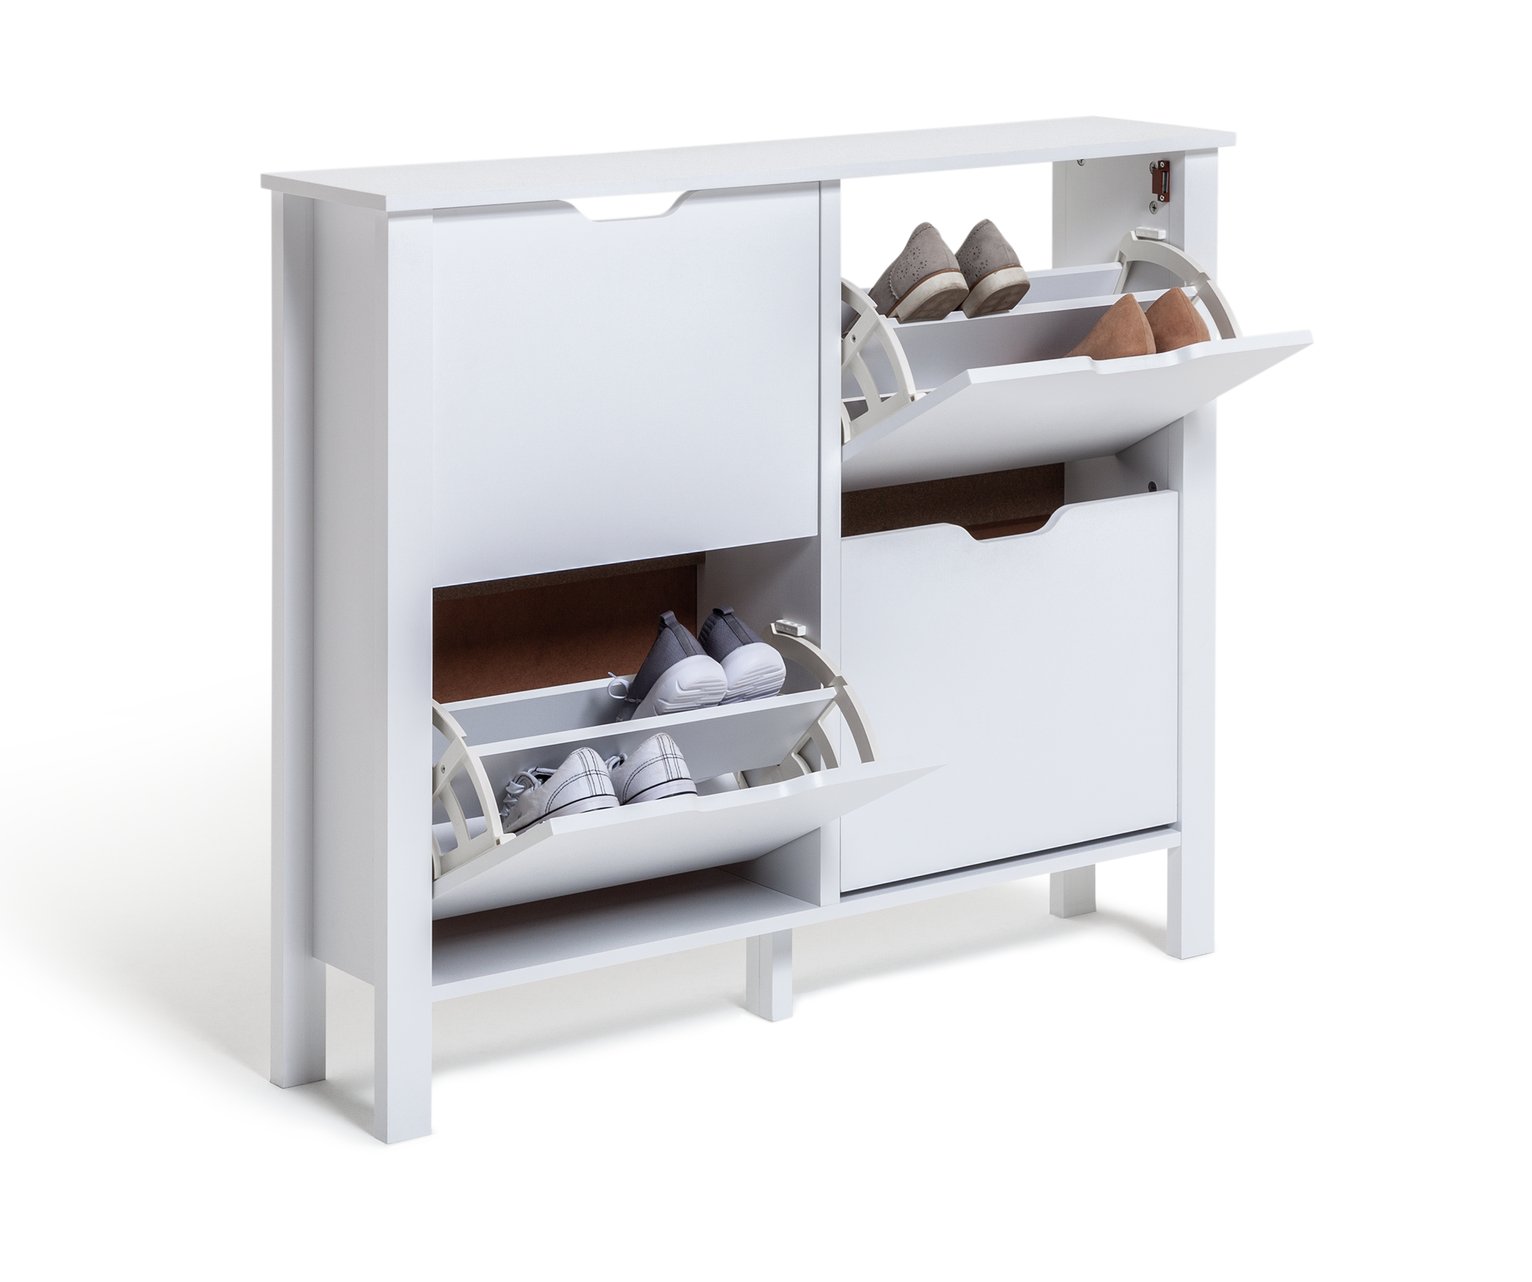 Habitat Compton 4 Shelf Shoe Storage Cabinet - White